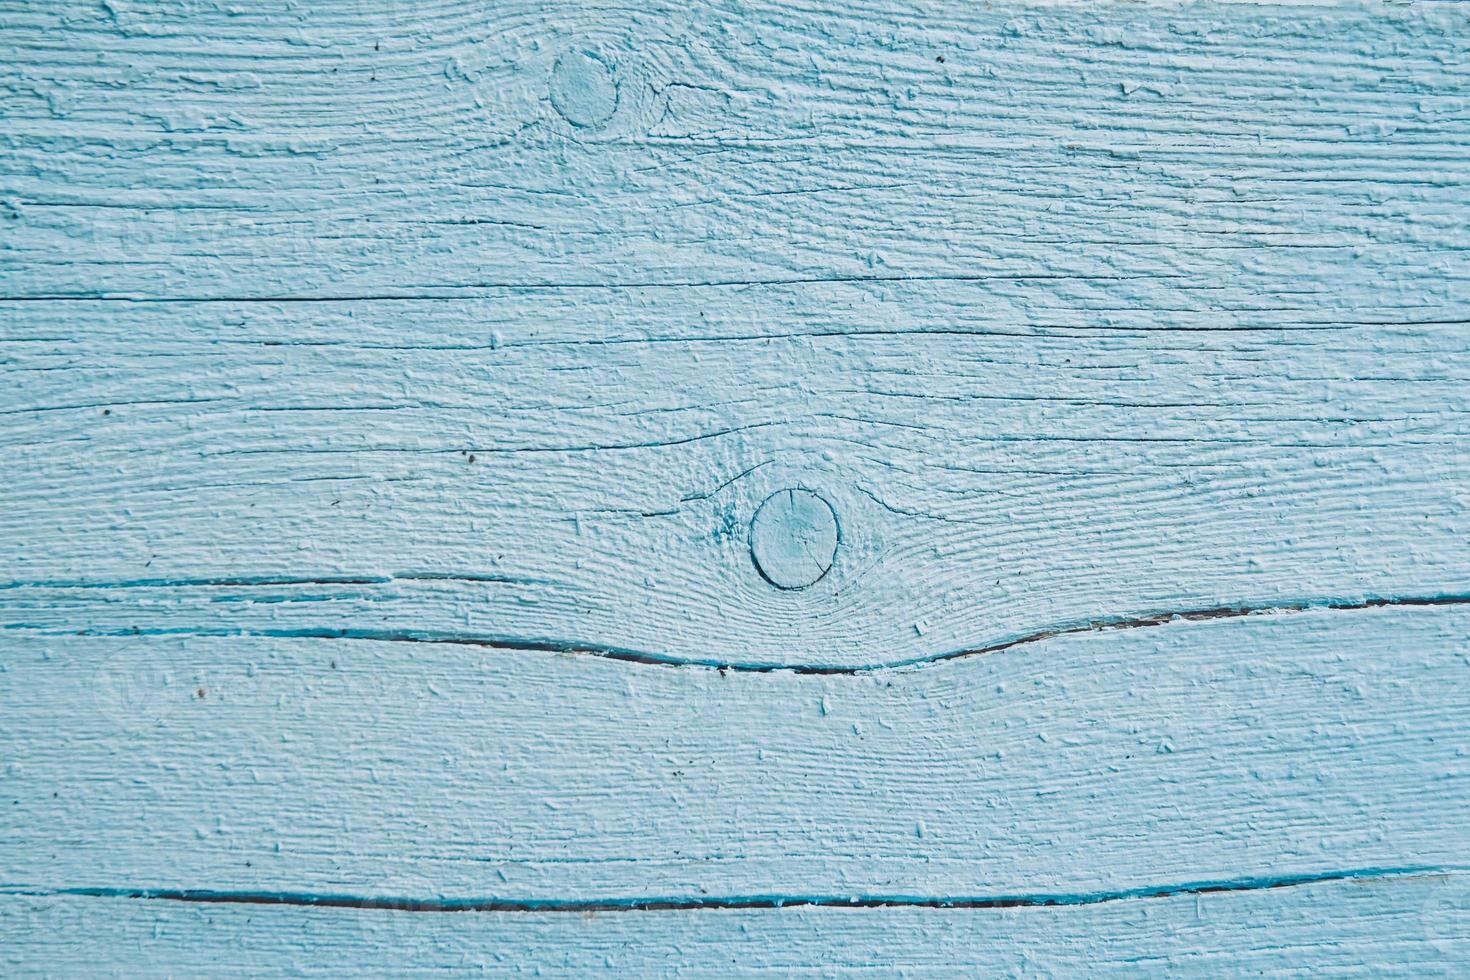 oude grungy houten planken achtergrond in blauwe kleur. foto